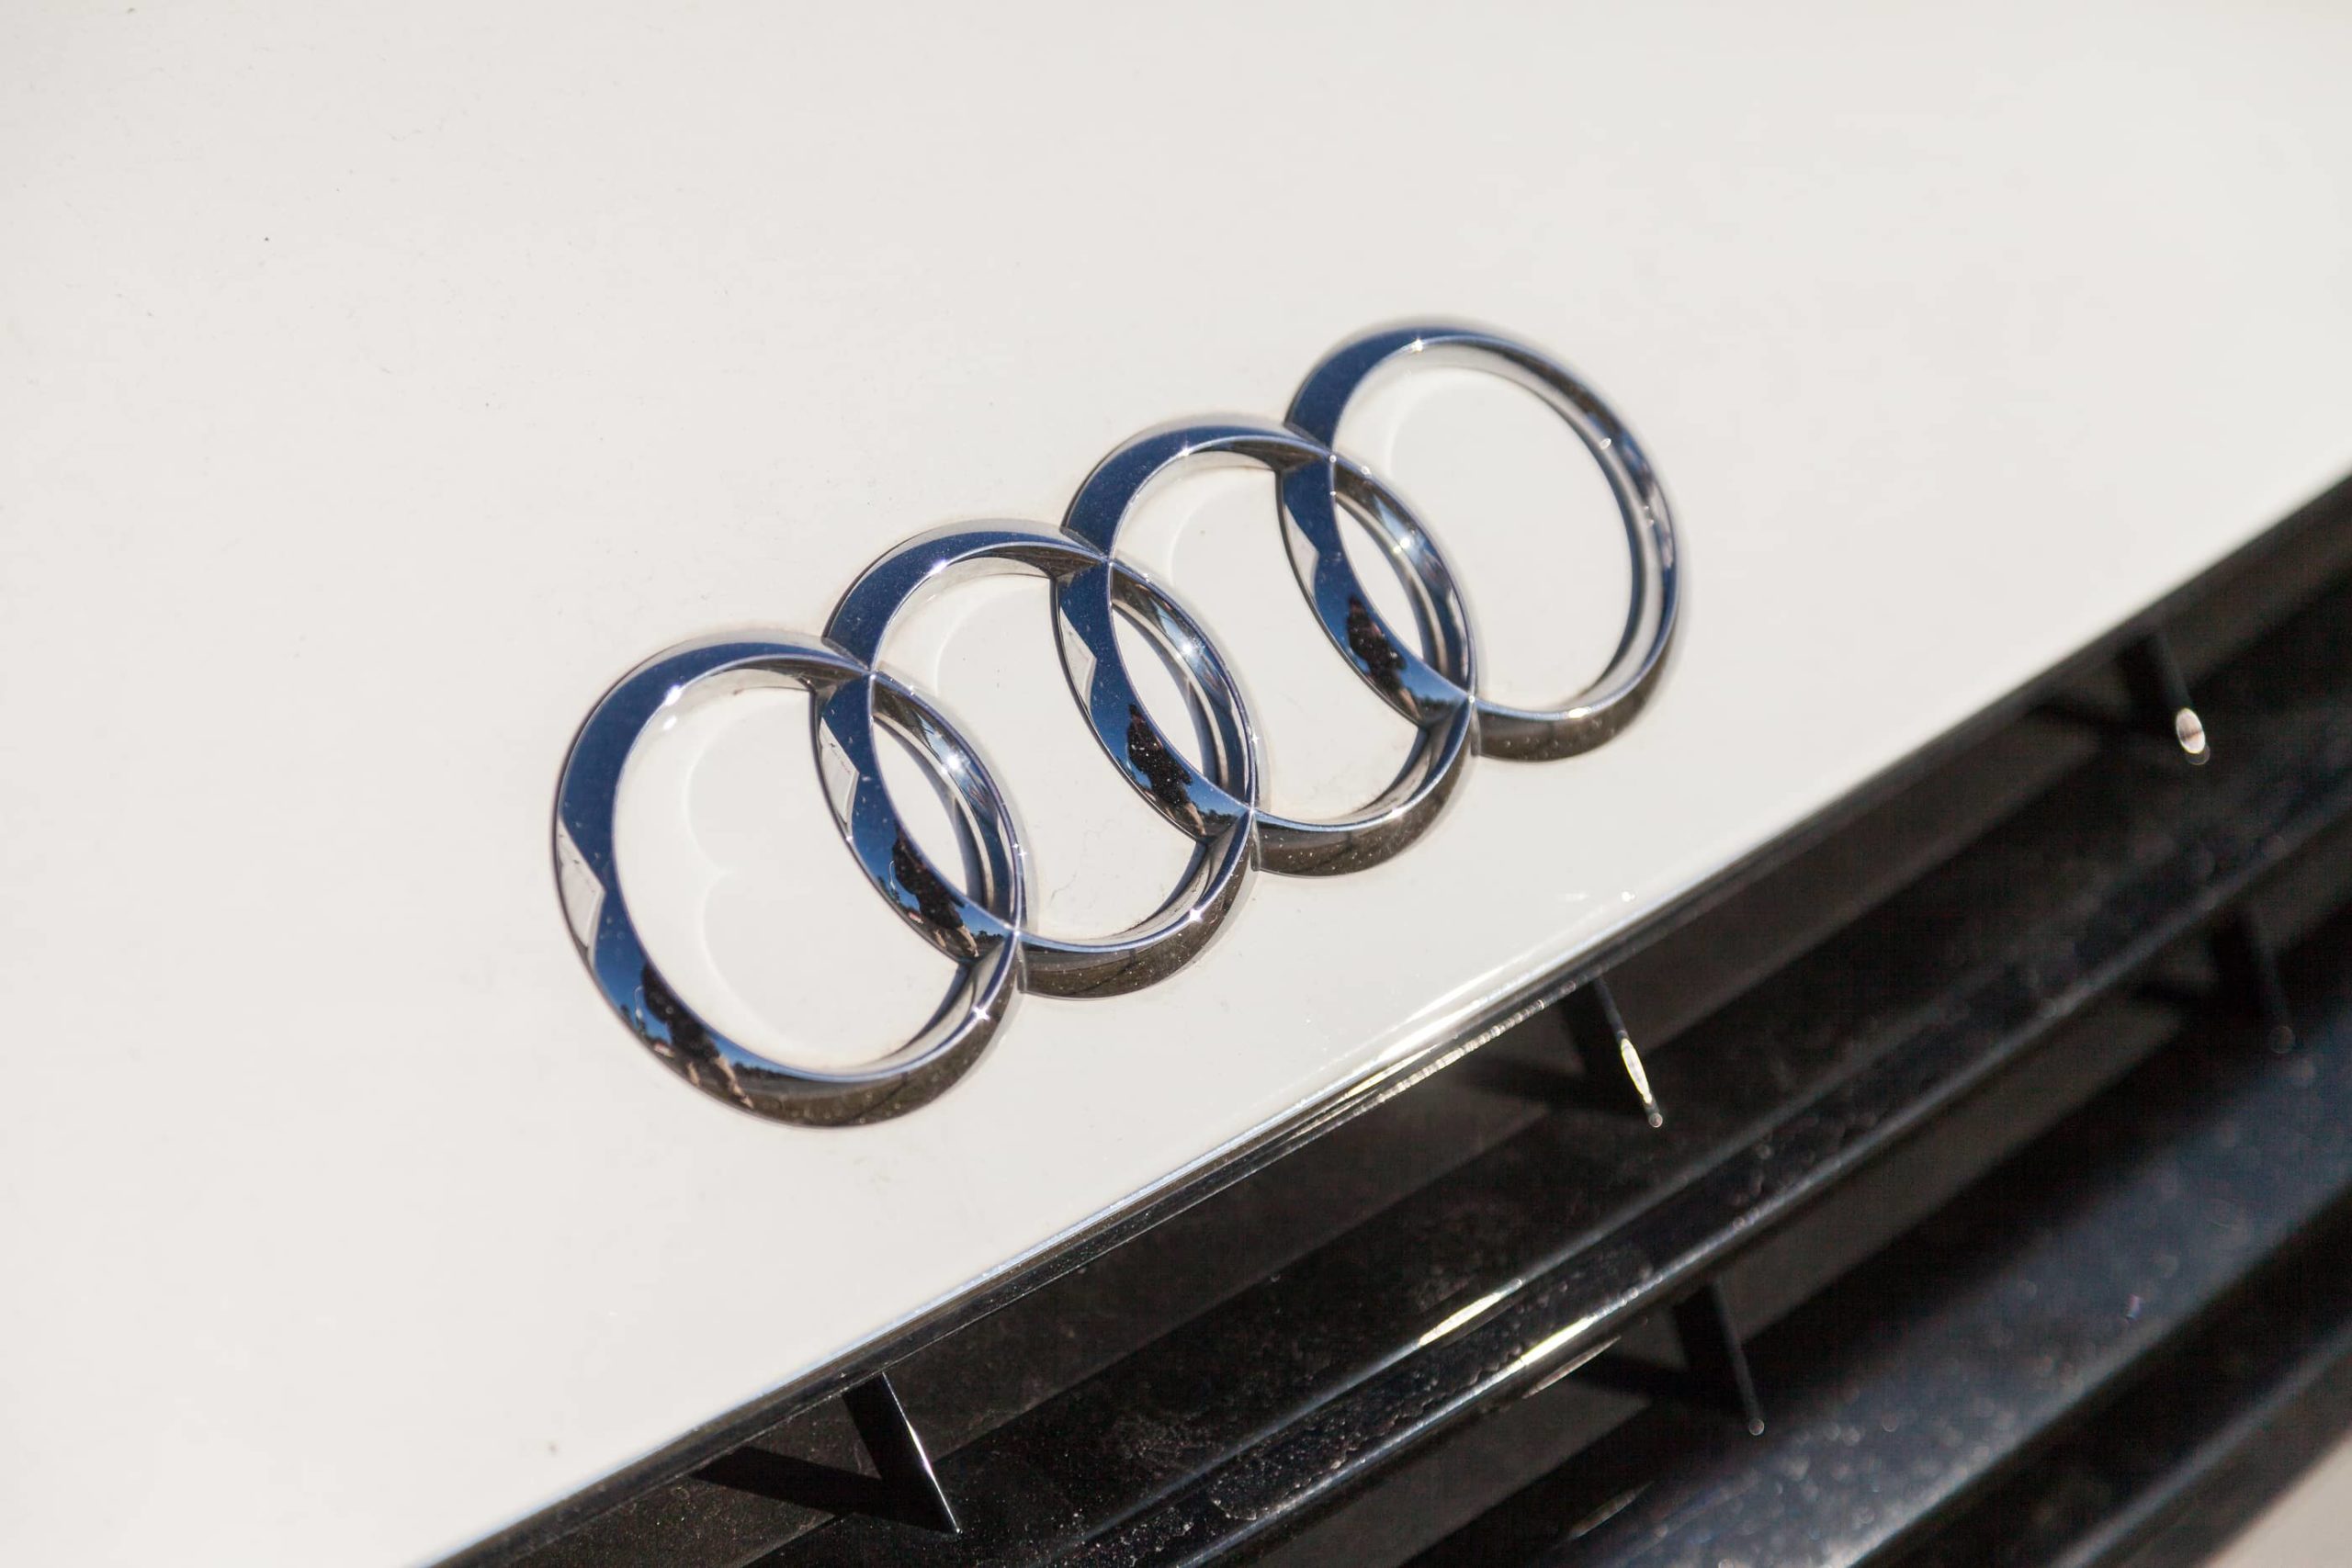 Audi Q5 SUVs Recalled for Liquid Spill Engine Shutdown Dangers